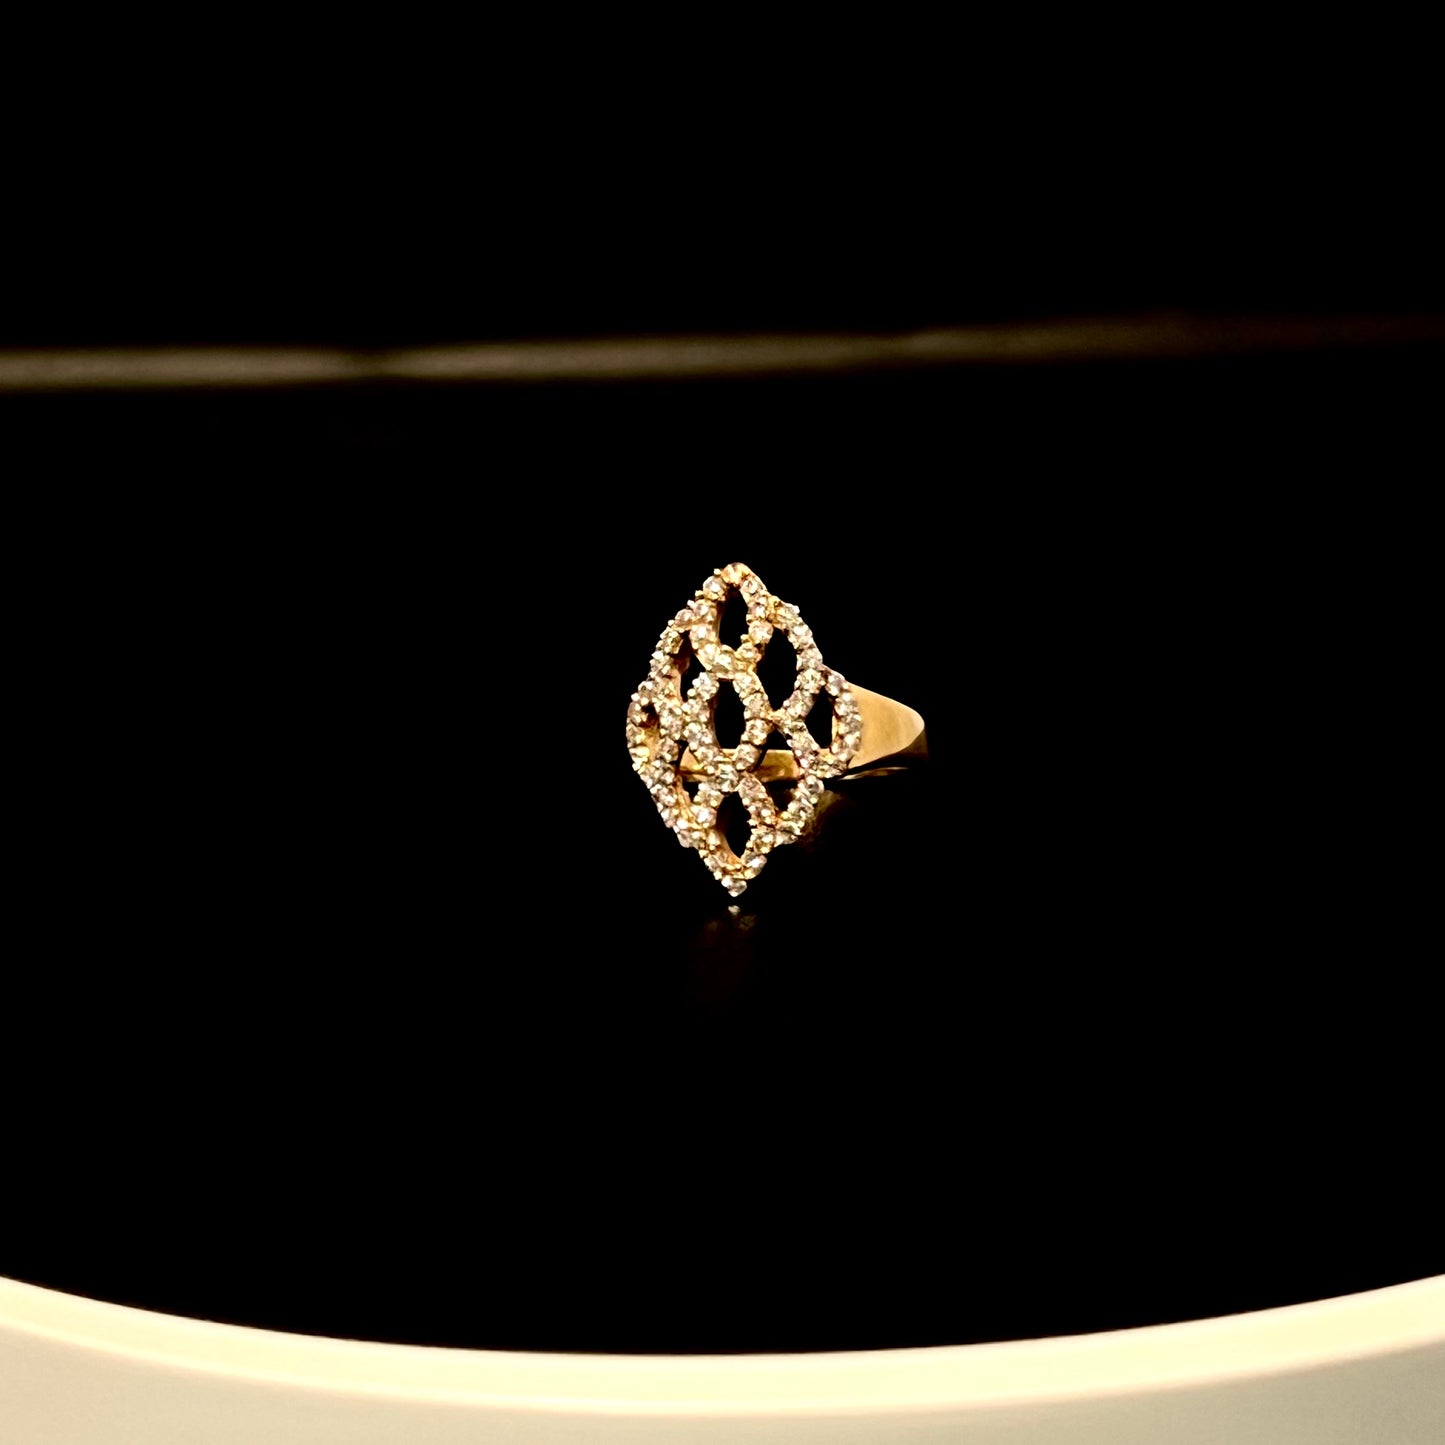 Diamond-Shaped Ring with Stunning CZ